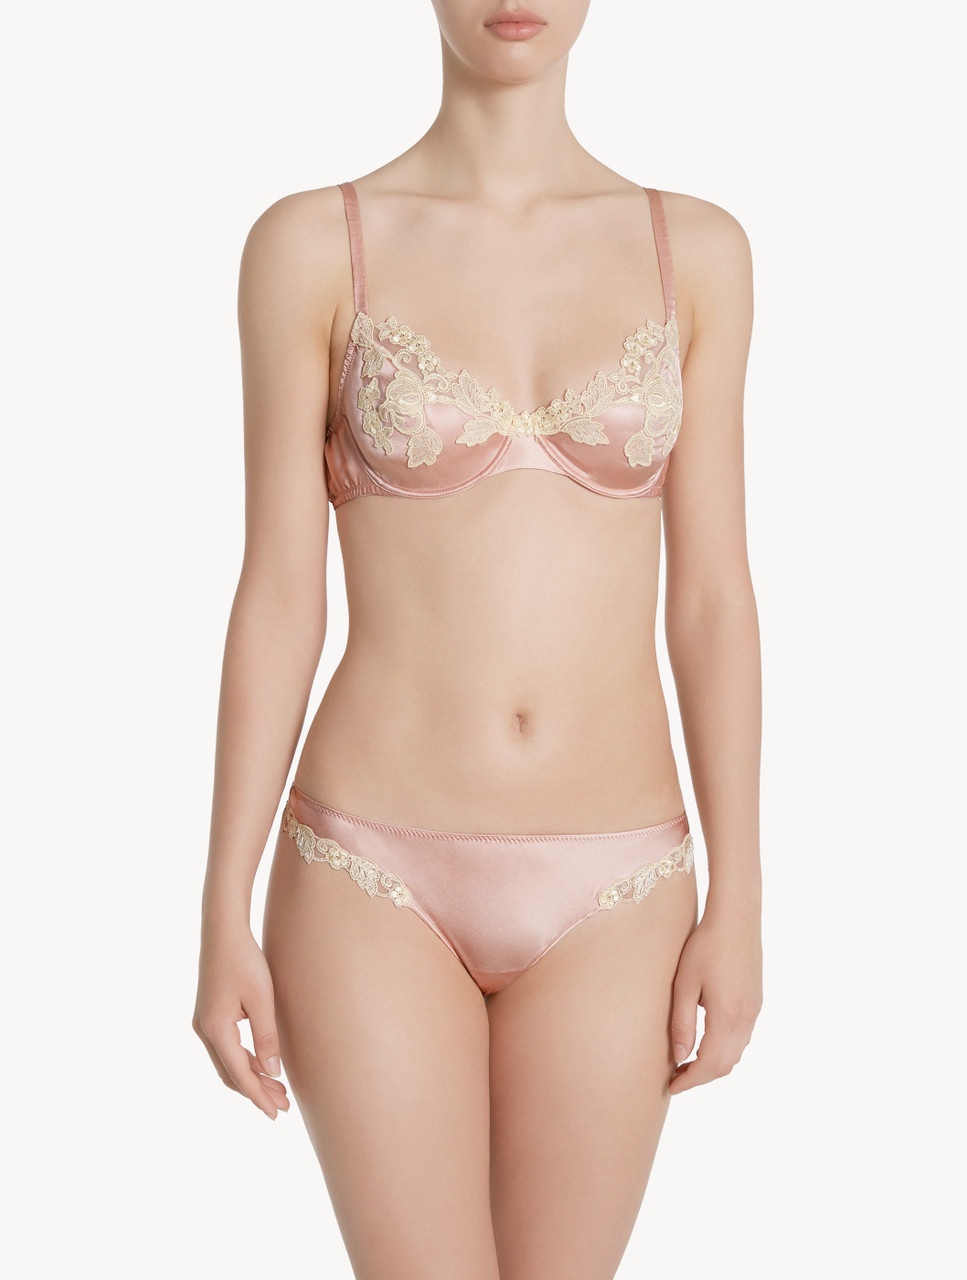 La Perla - Irresistible. The Maison pink silk triangle bra with